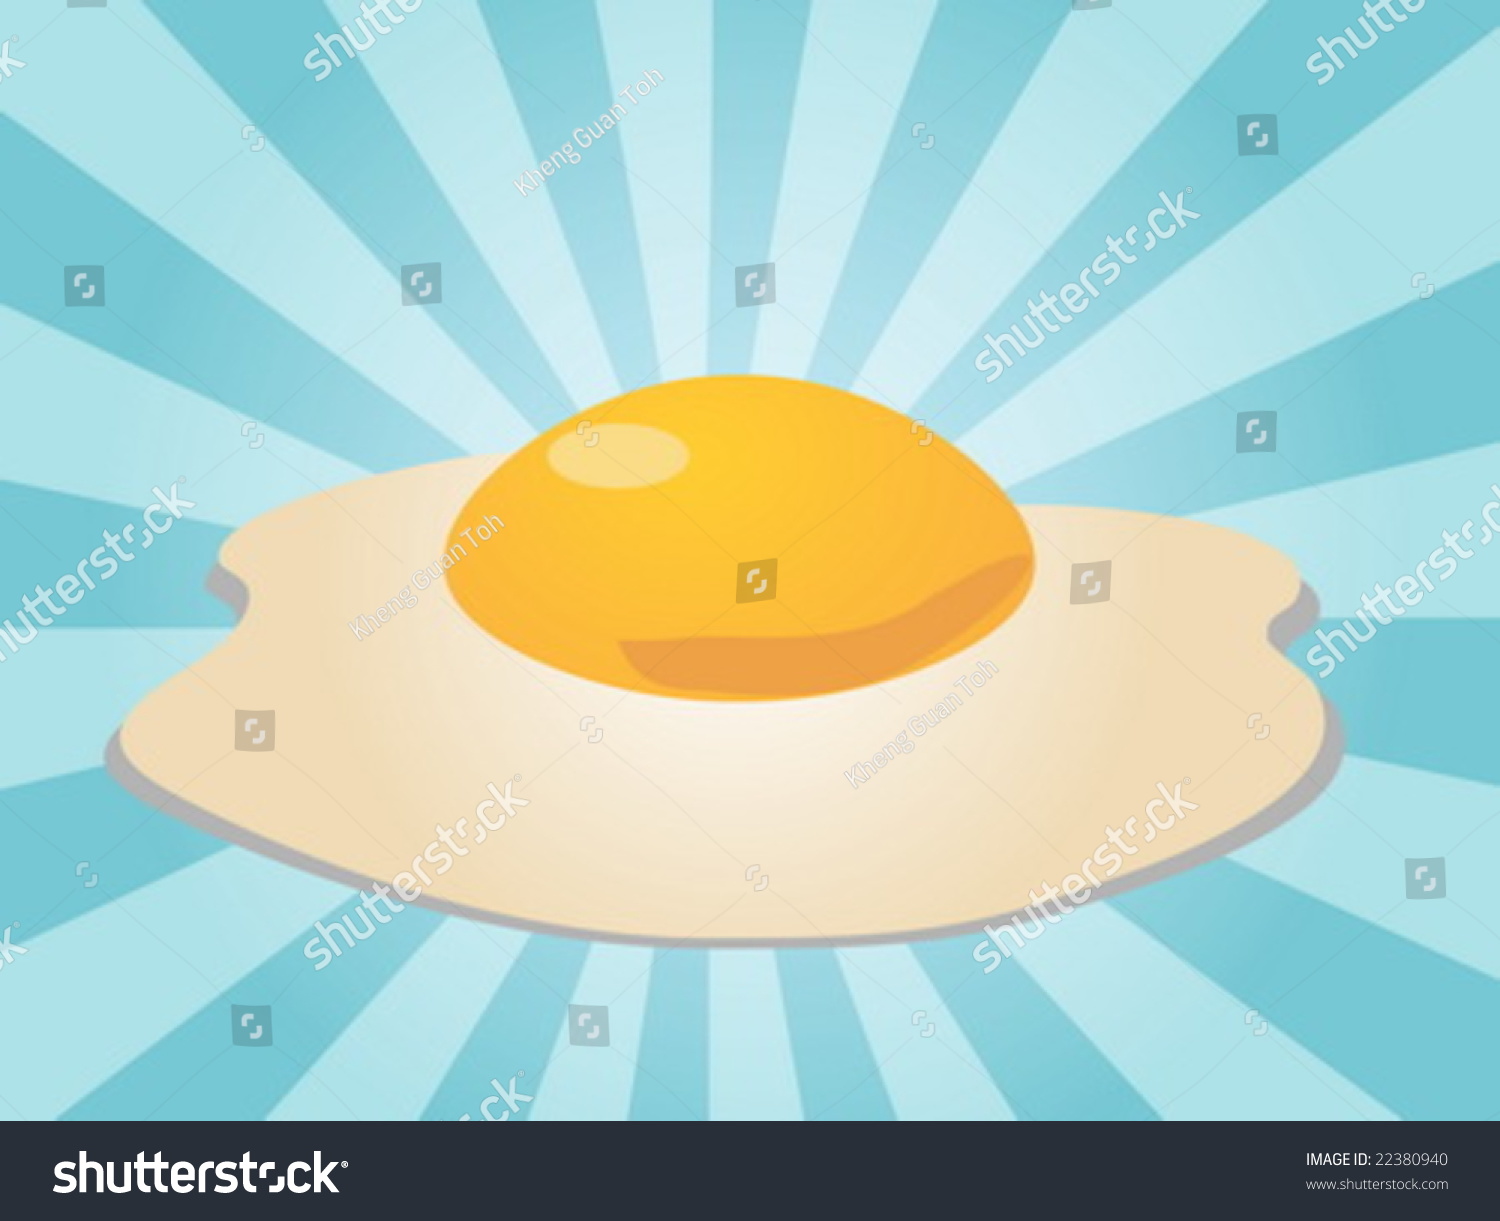 clipart of yolk - photo #23